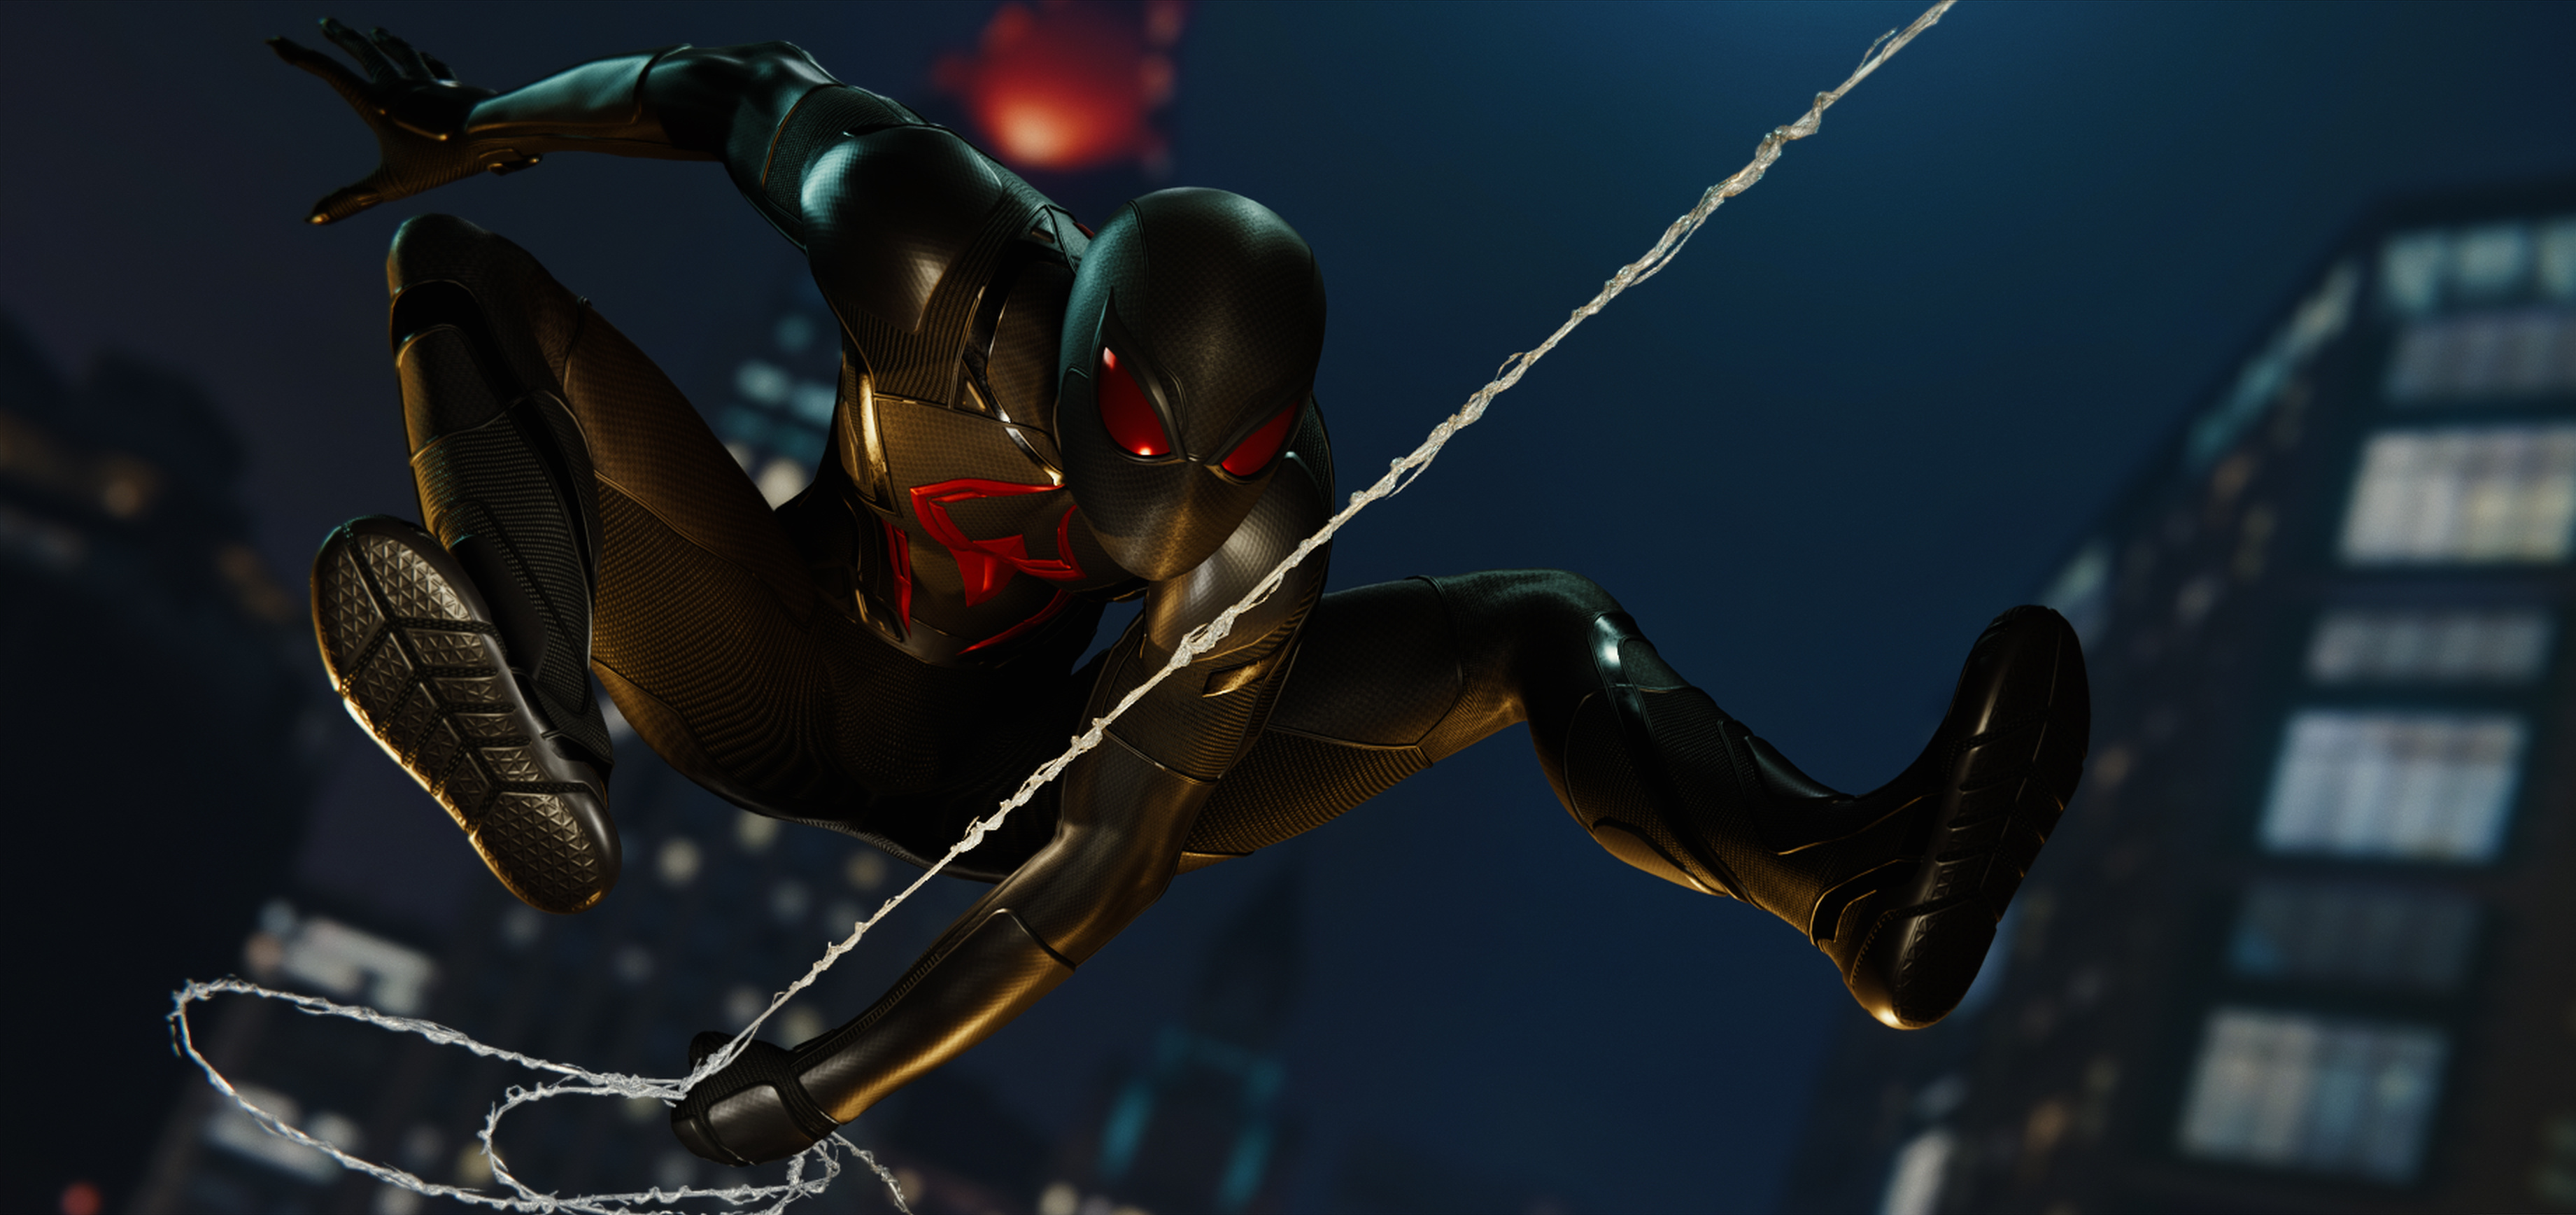 Spider-Man PS4, Dark suit, Gripping gameplay, Action-packed adventure, 3690x1740 Dual Screen Desktop